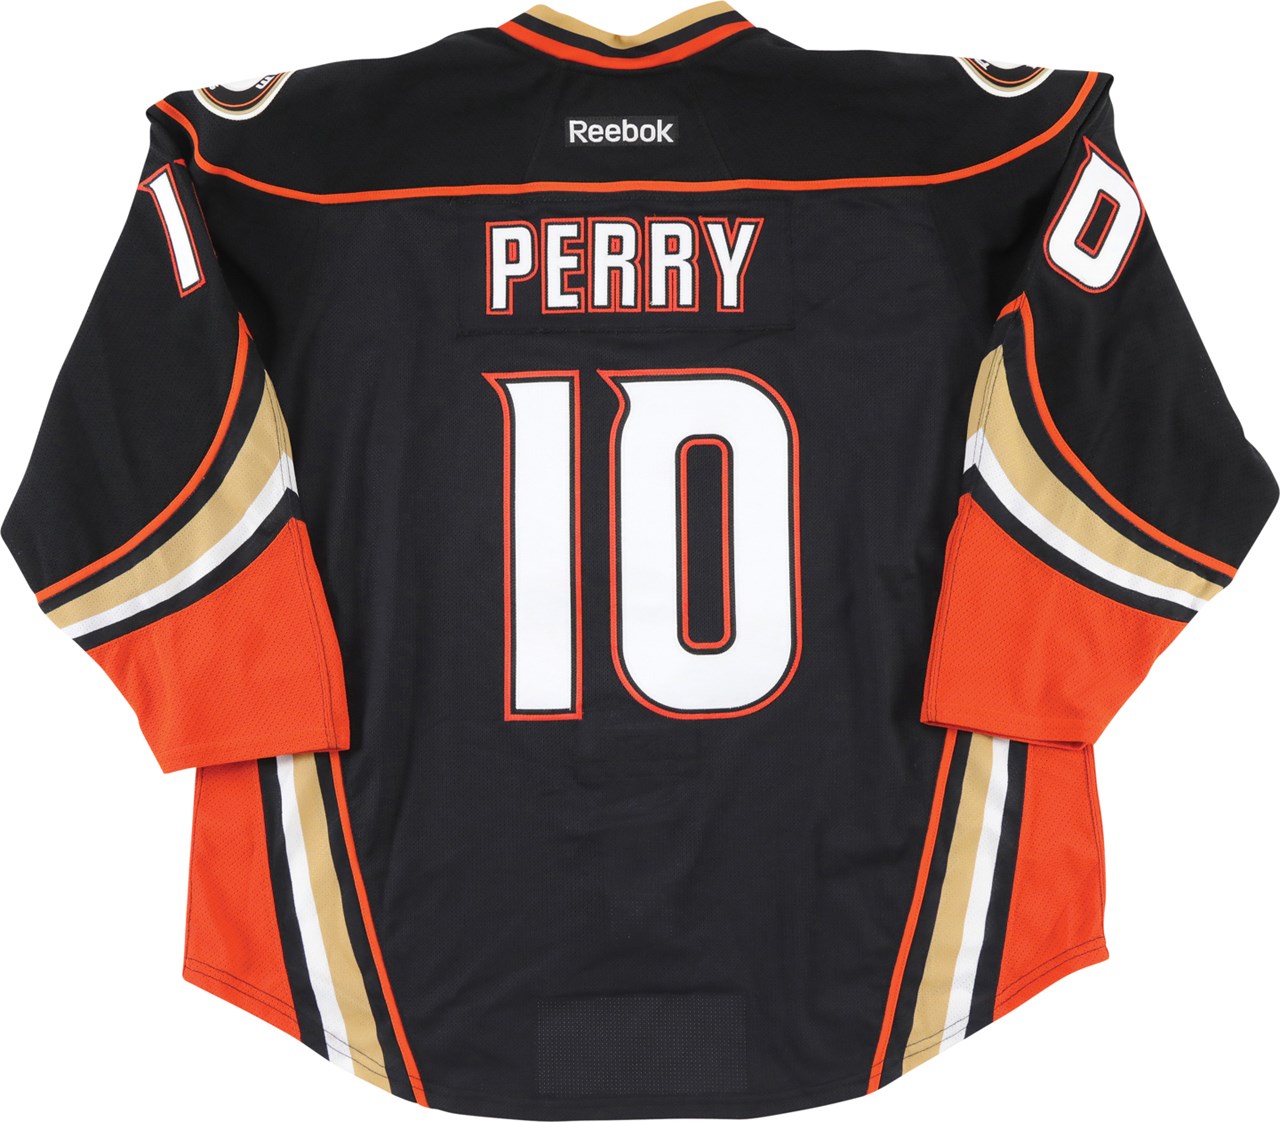 - 2015 Corey Perry Anaheim Ducks Teemu Selanne Tribute Night Game Worn Jersey